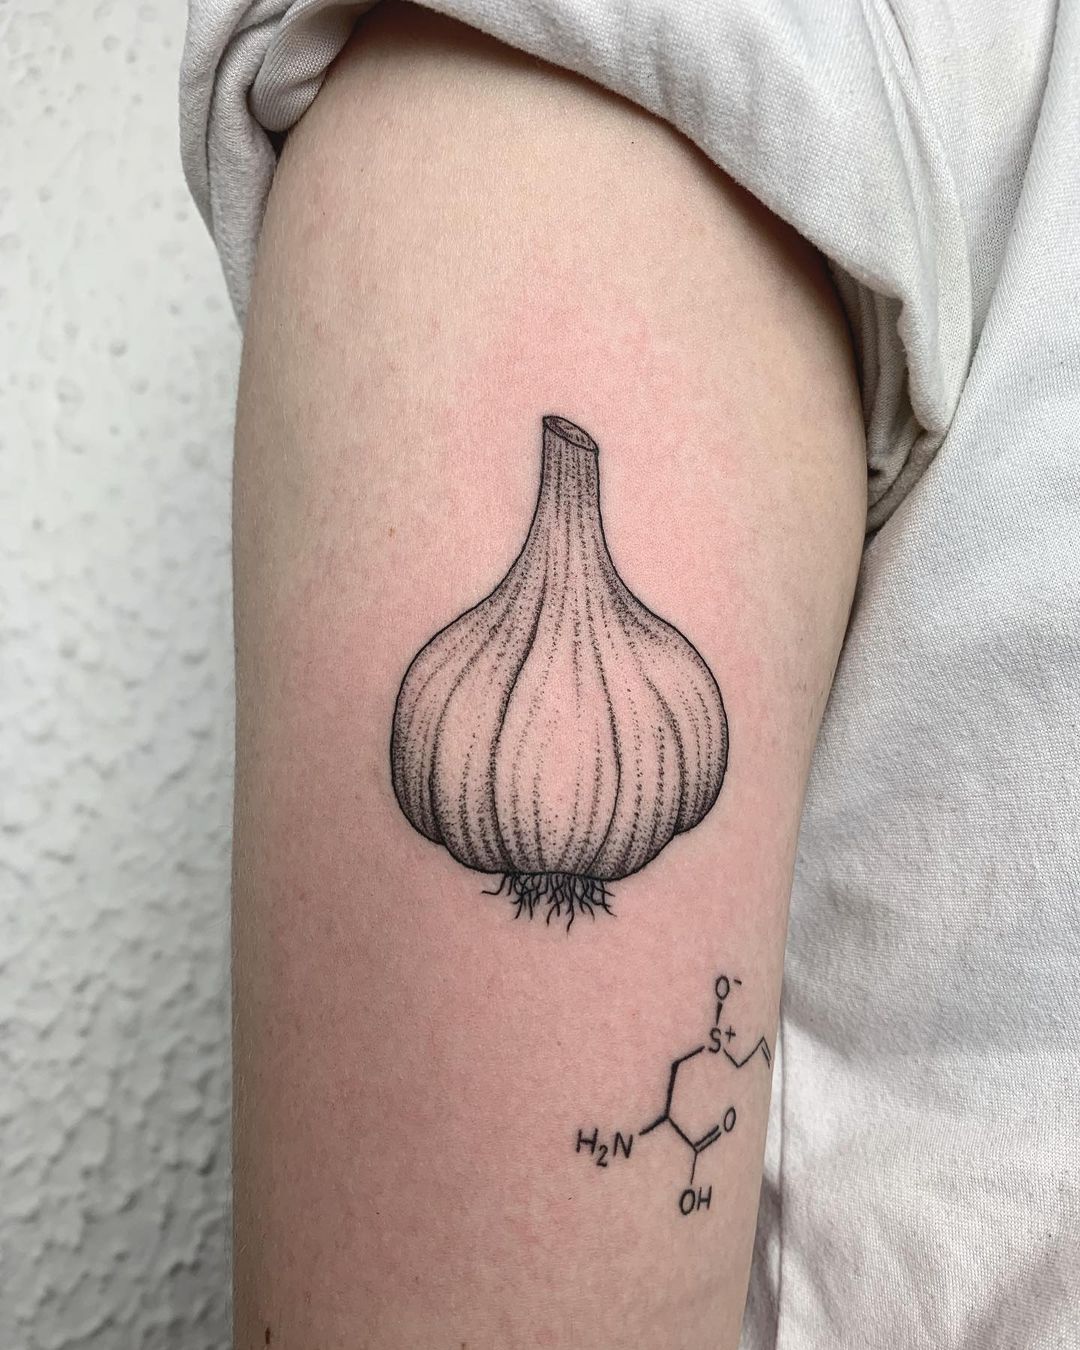 garlic tattoo on the arm